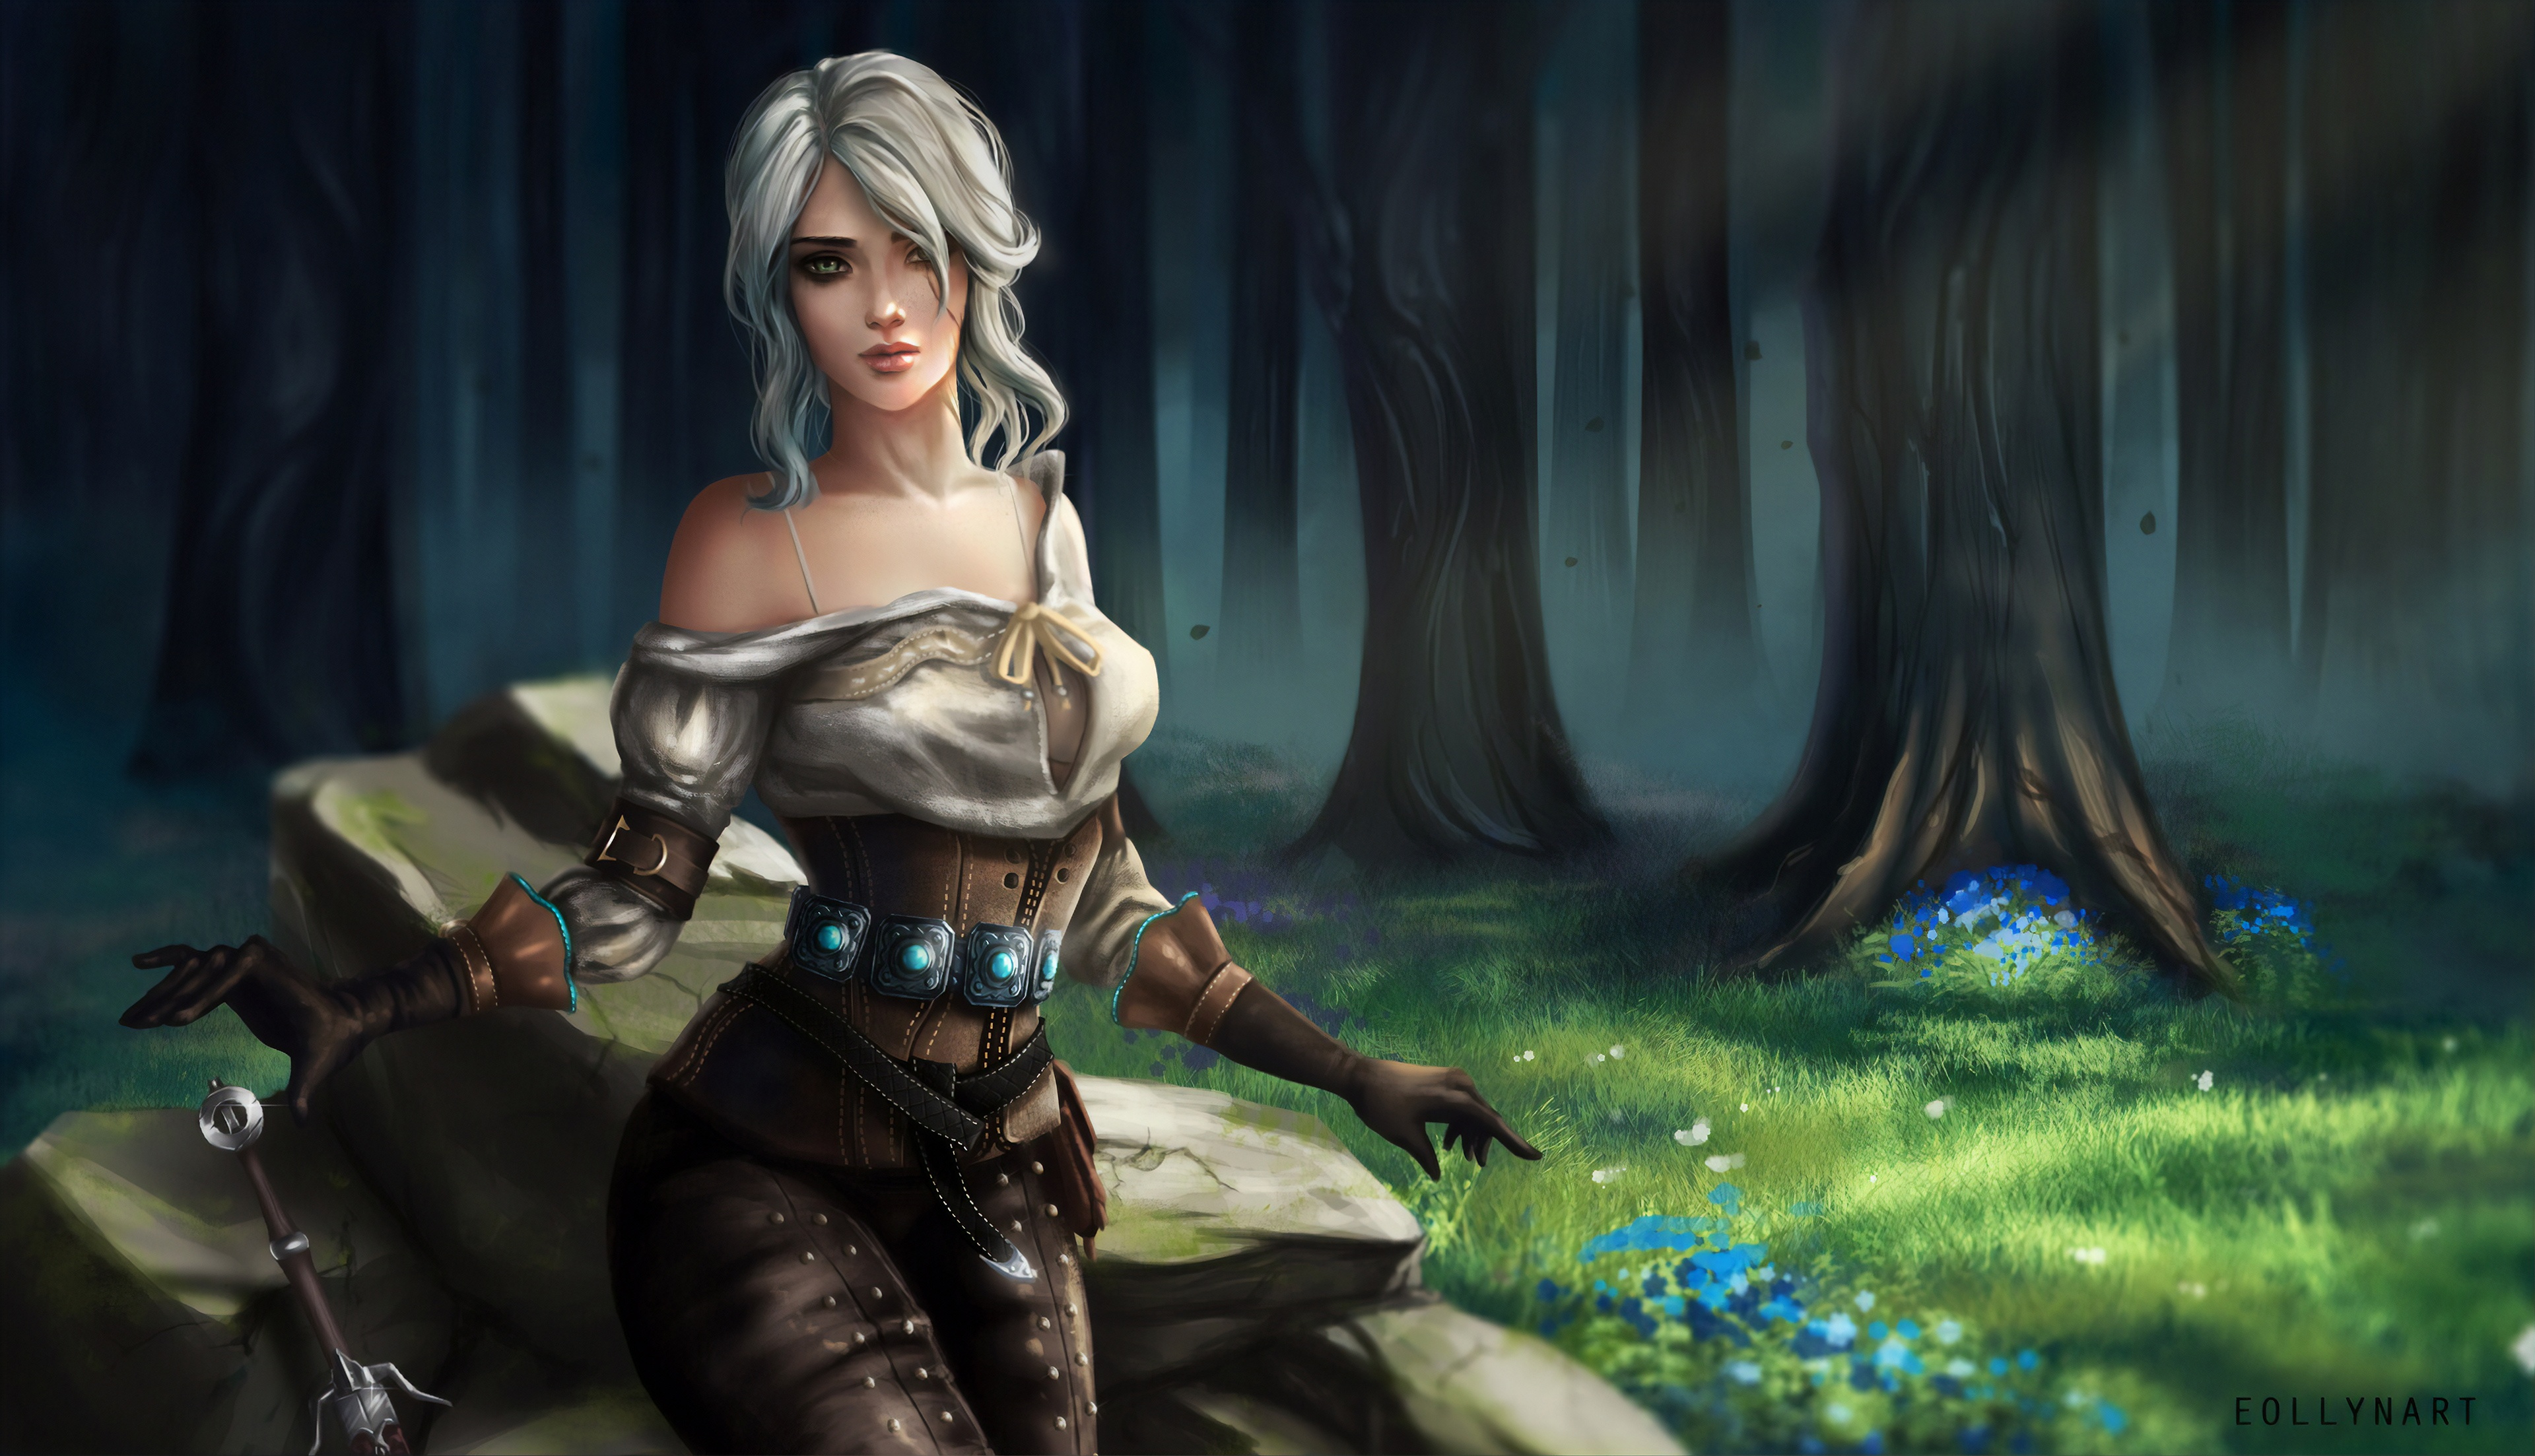 General 3840x2206 The Witcher 3: Wild Hunt Cirilla Fiona Elen Riannon fantasy art video game art video games fantasy girl